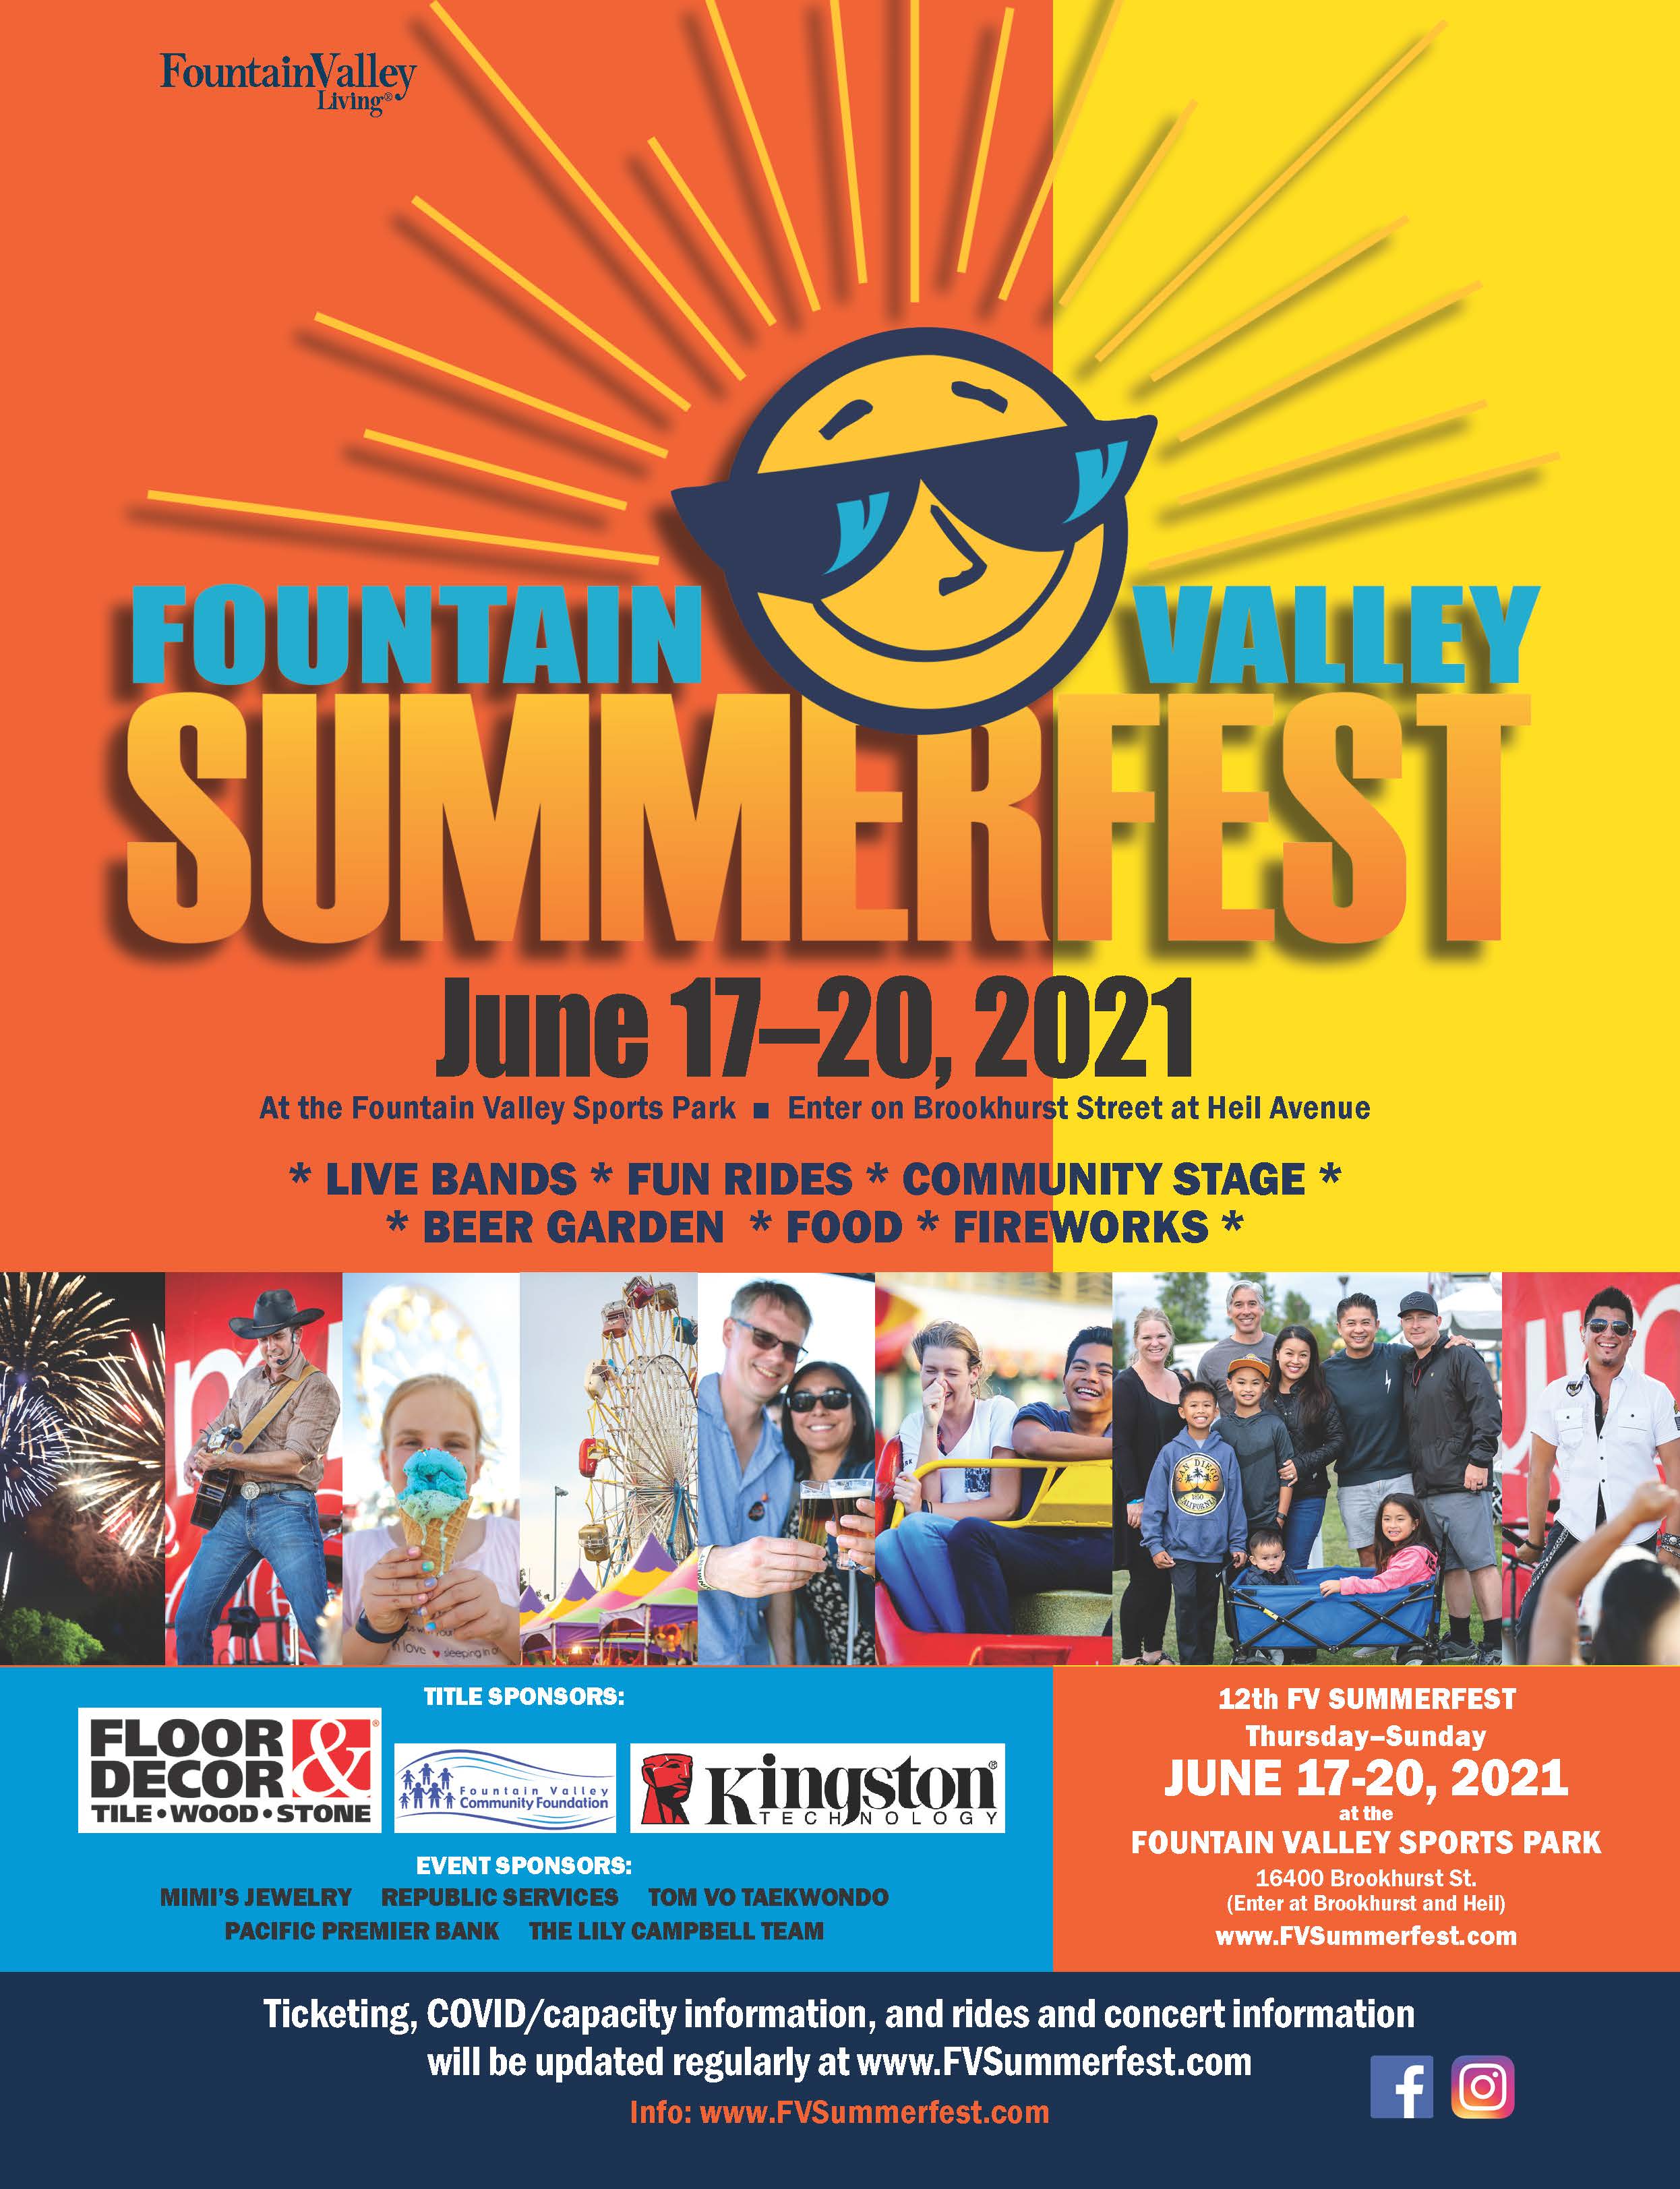 Enjoy Summer at Orange County Events Like FV Summerfest